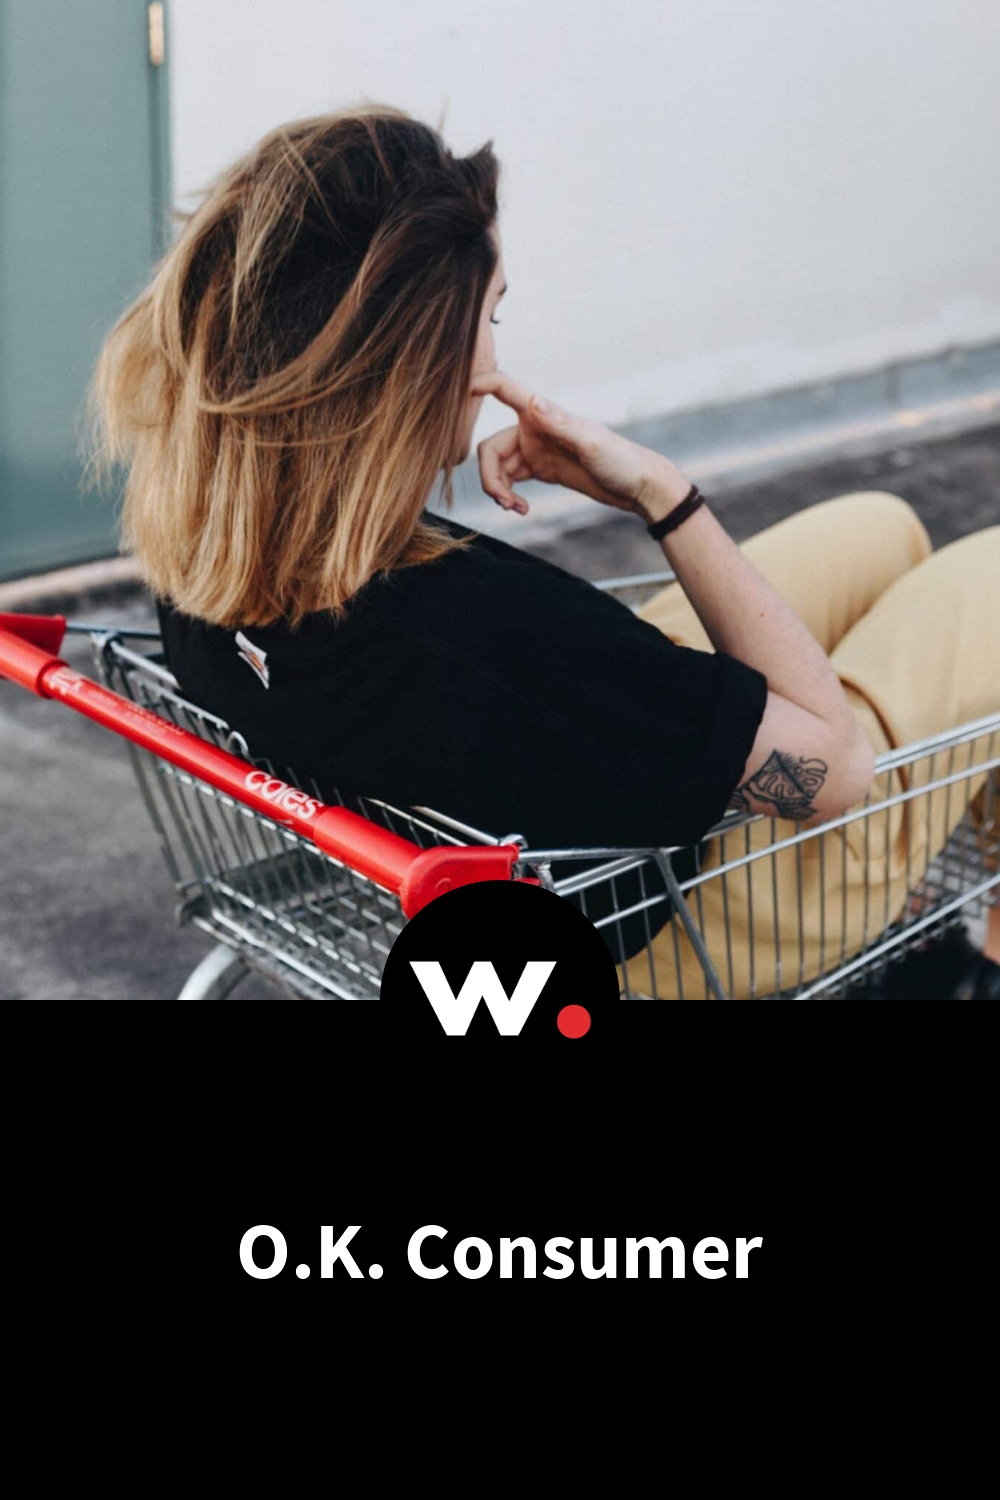 O.K. Consumer